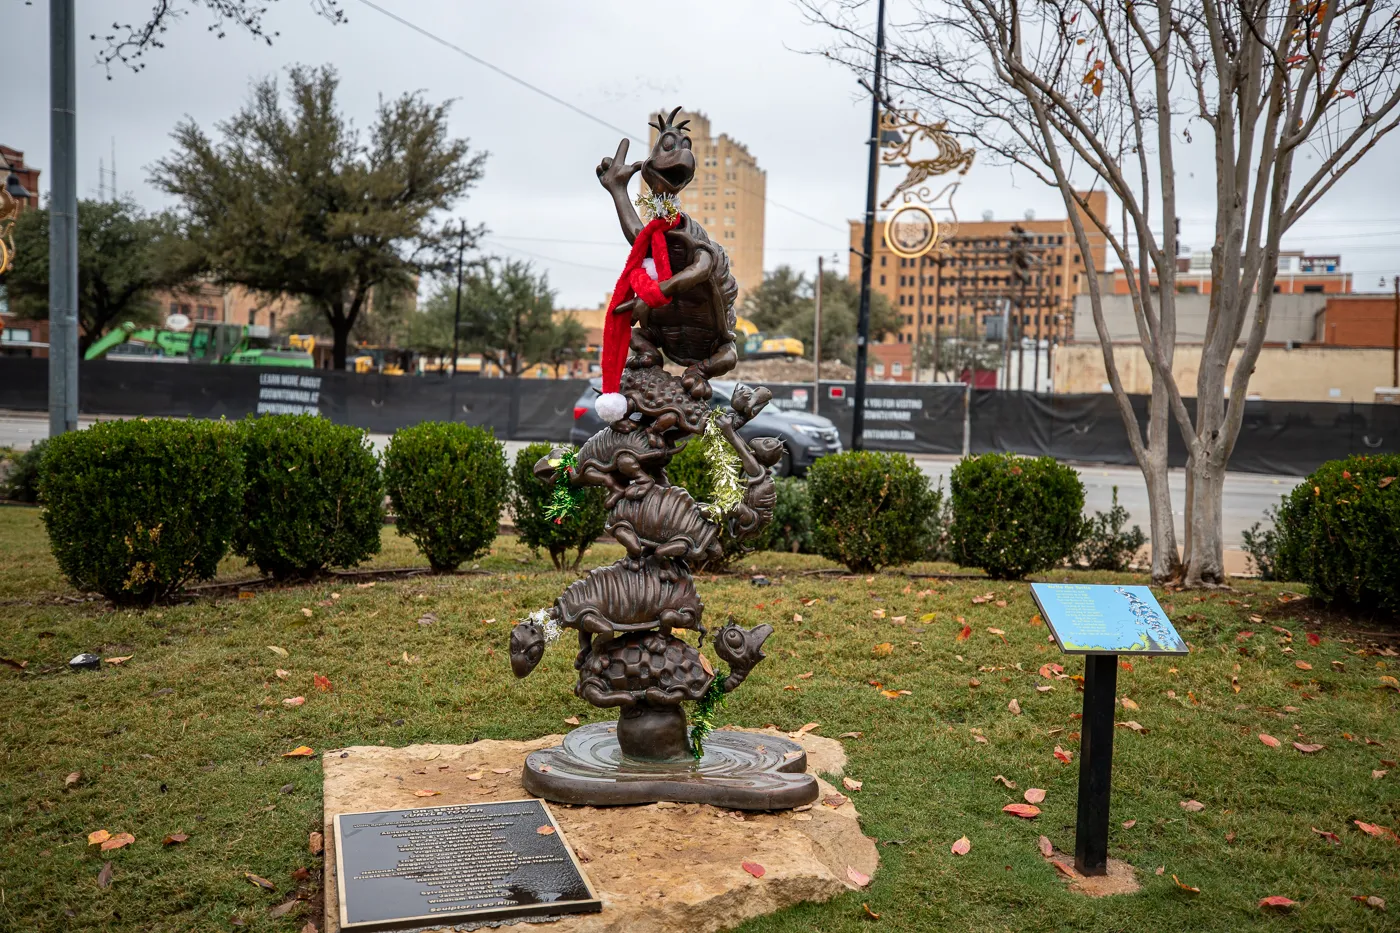 Yertle the Turtle statue at Dr. Seuss Park in Abilene, Texas (Everman Park)